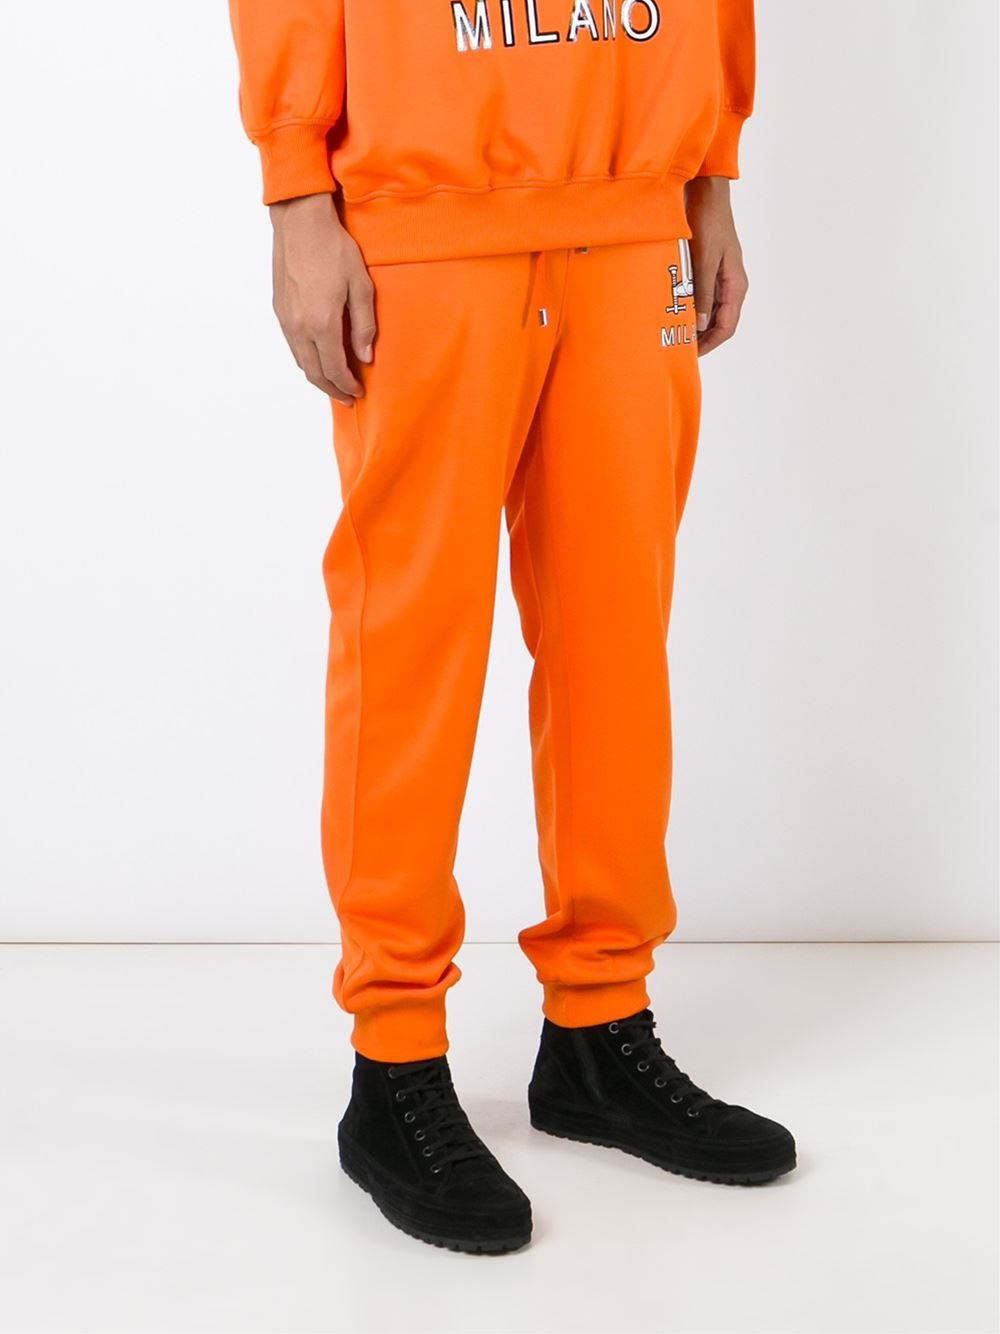 Lyst - Moschino Interlocking C-clamp Sweatpants in Orange for Men